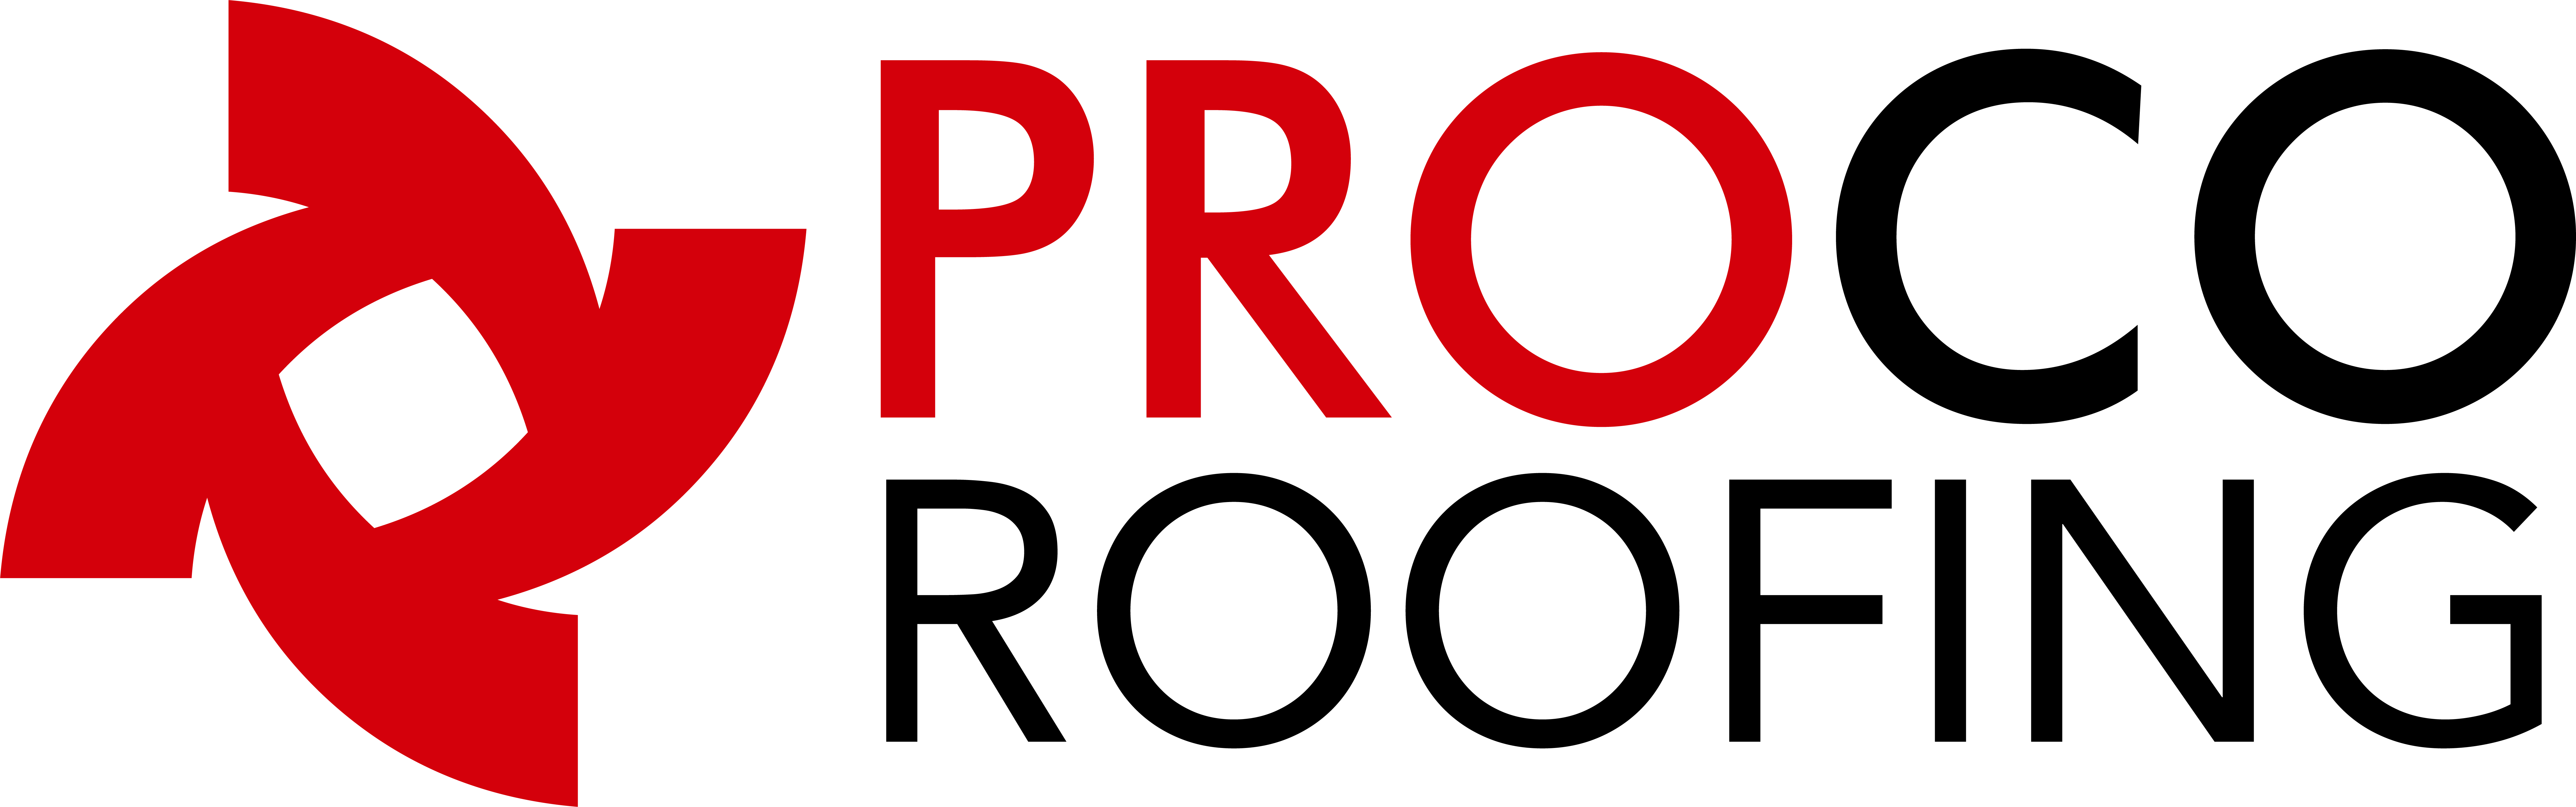 PROCO Roofing, LLC